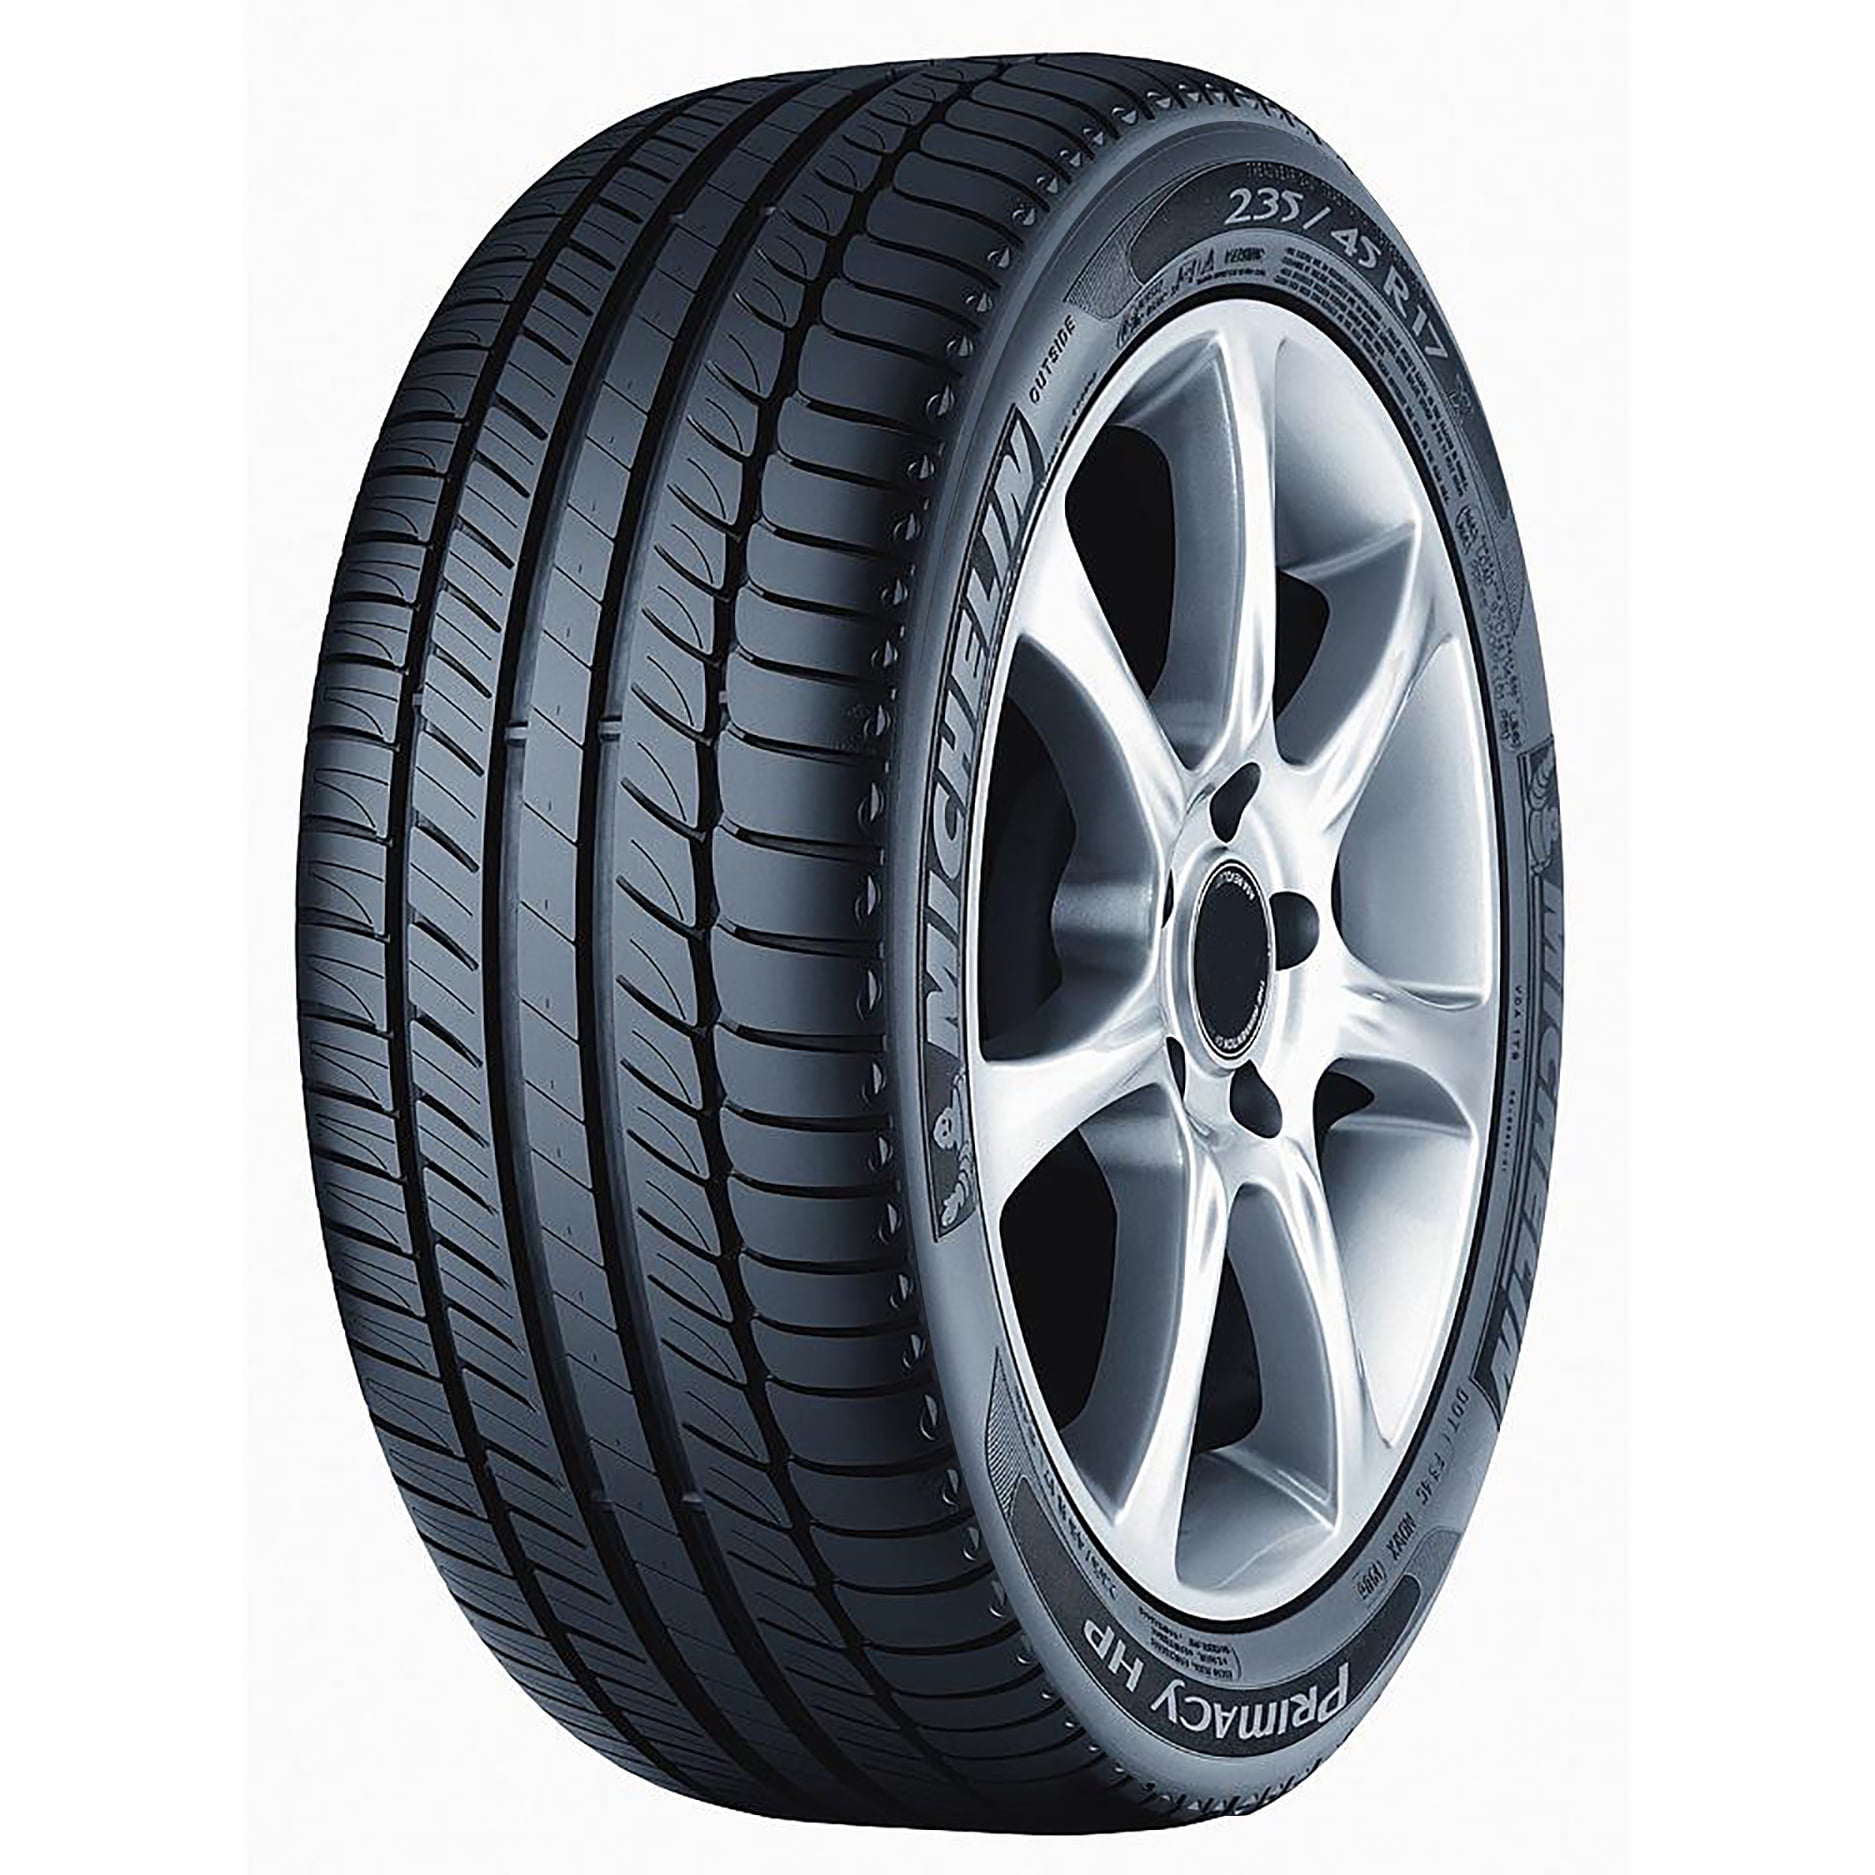 Michelin Primacy HP Summer 215/45R17 87W Tire - Walmart.com